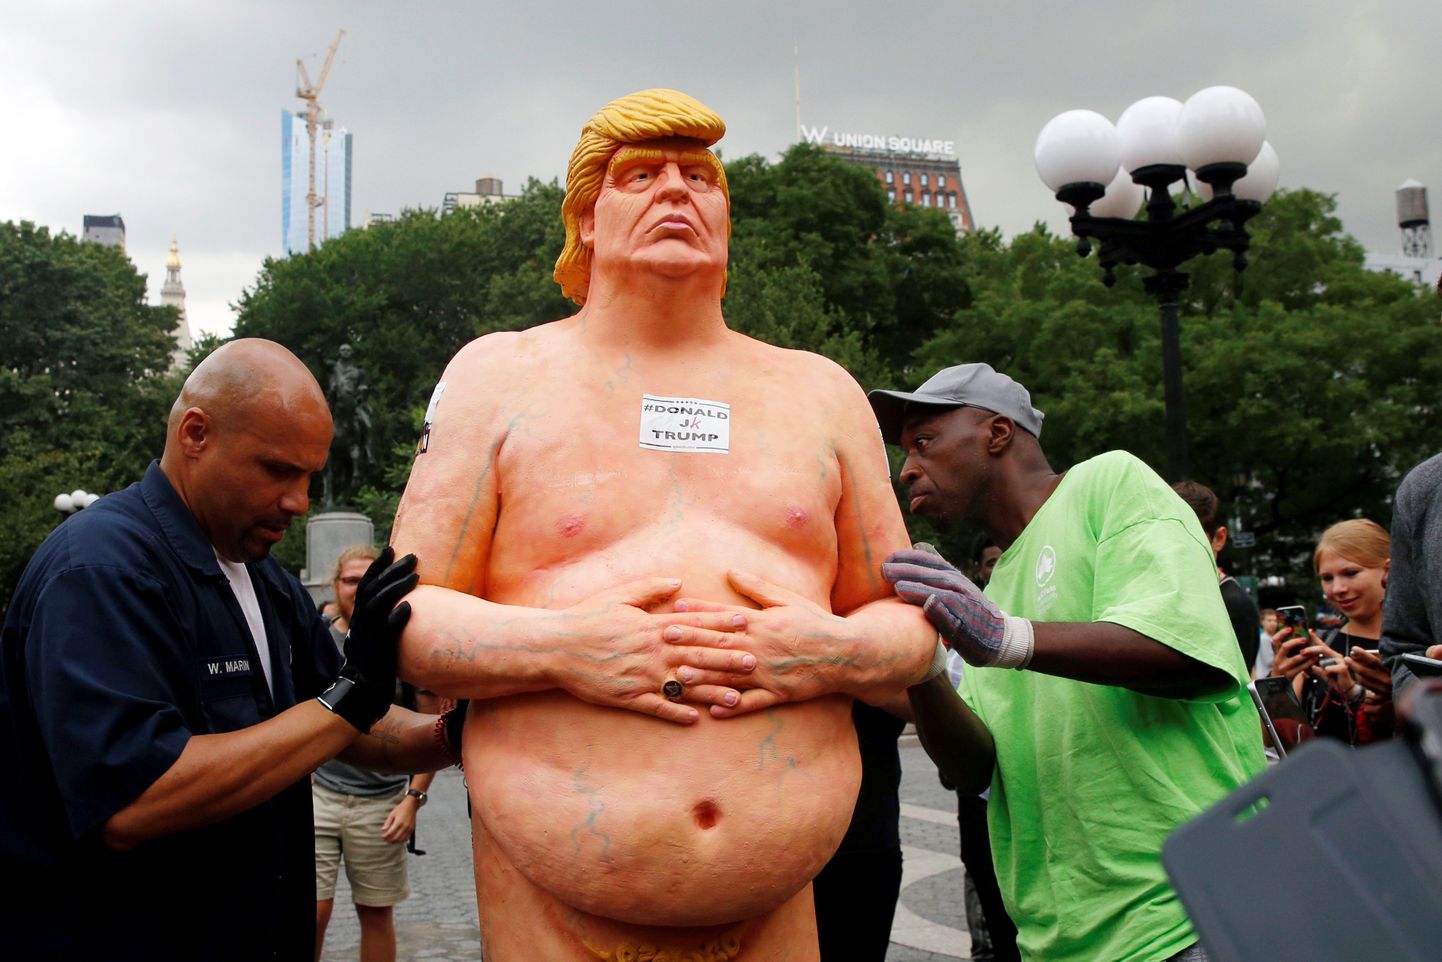 Donald Trumpi alastikuju